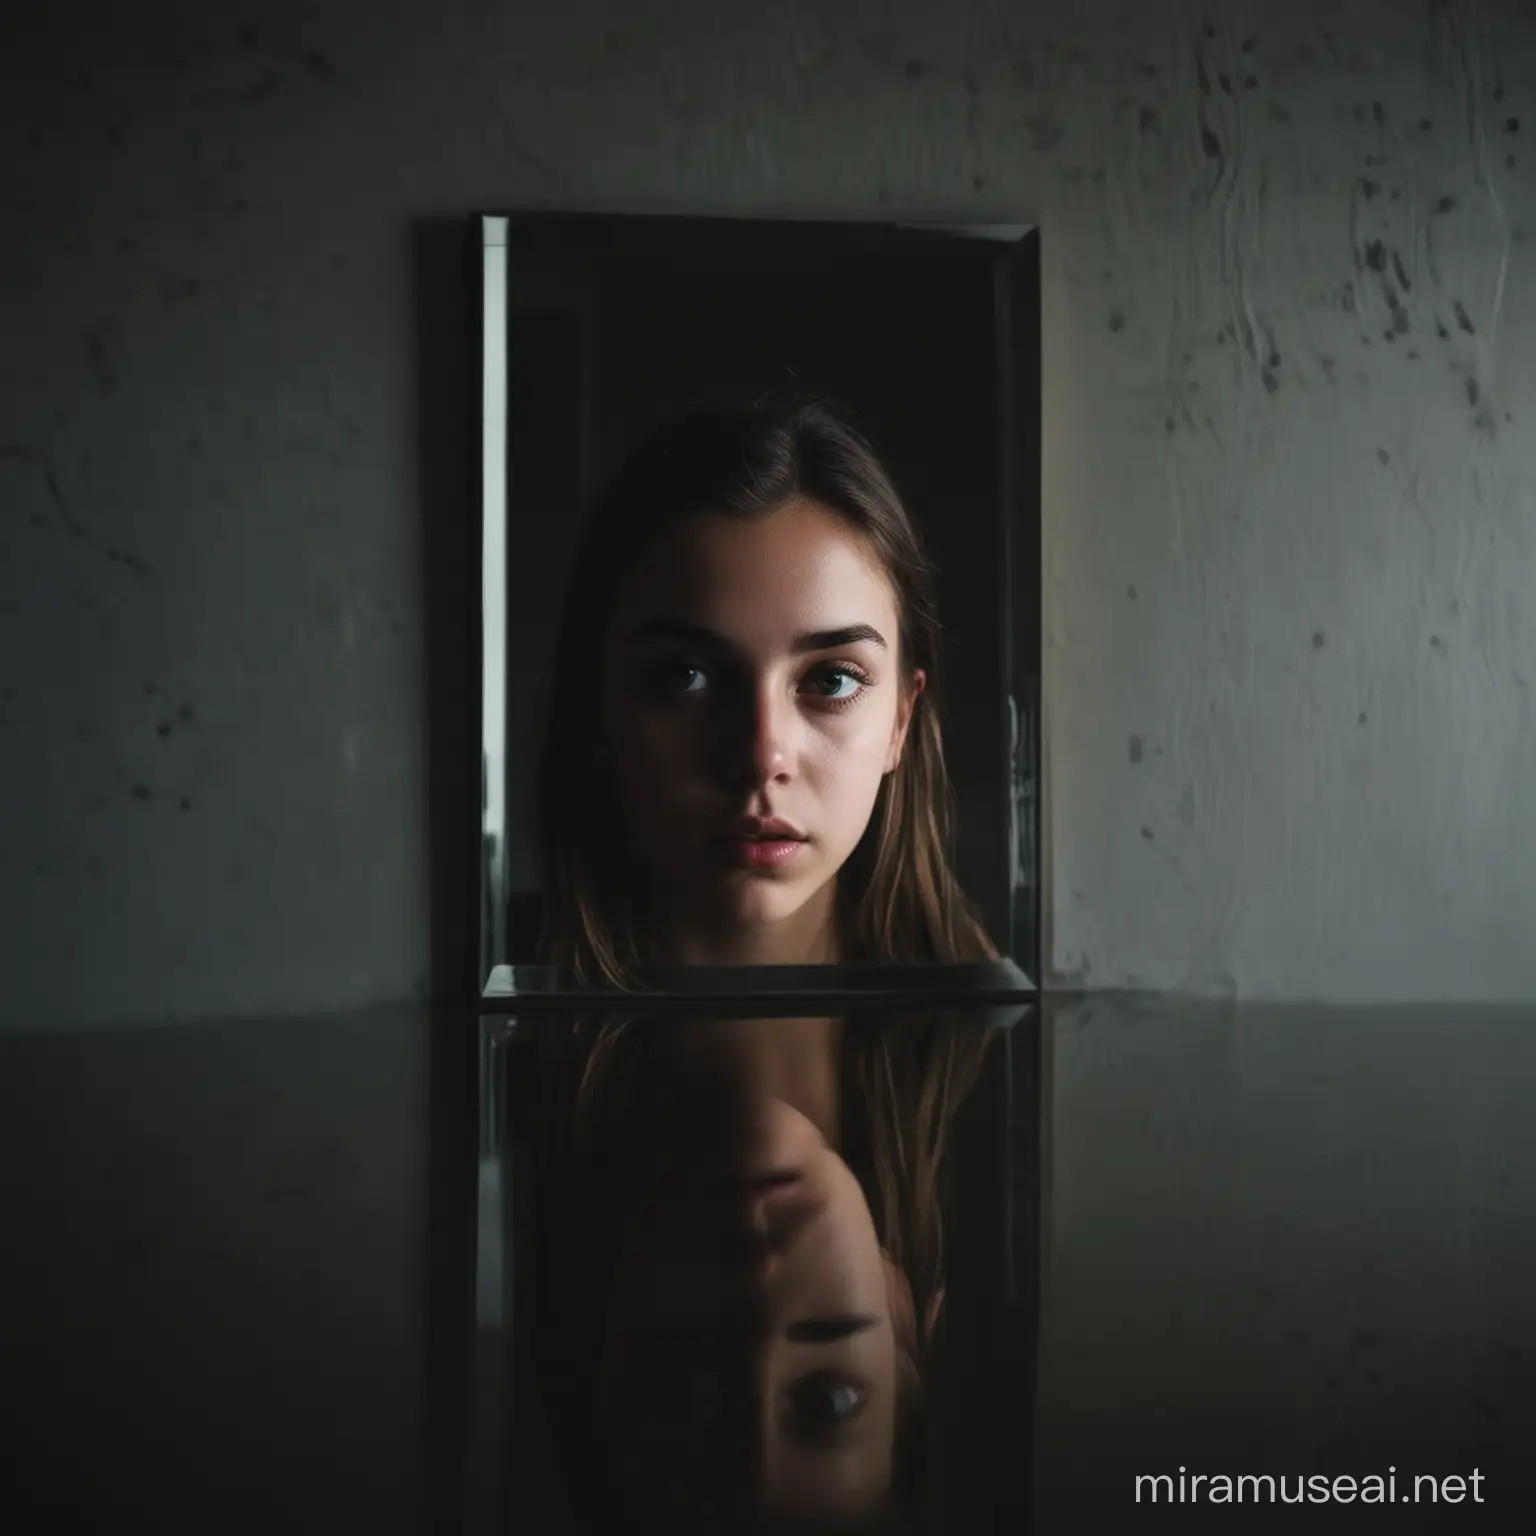 Girl Contemplating in Dark Mirror Reflection